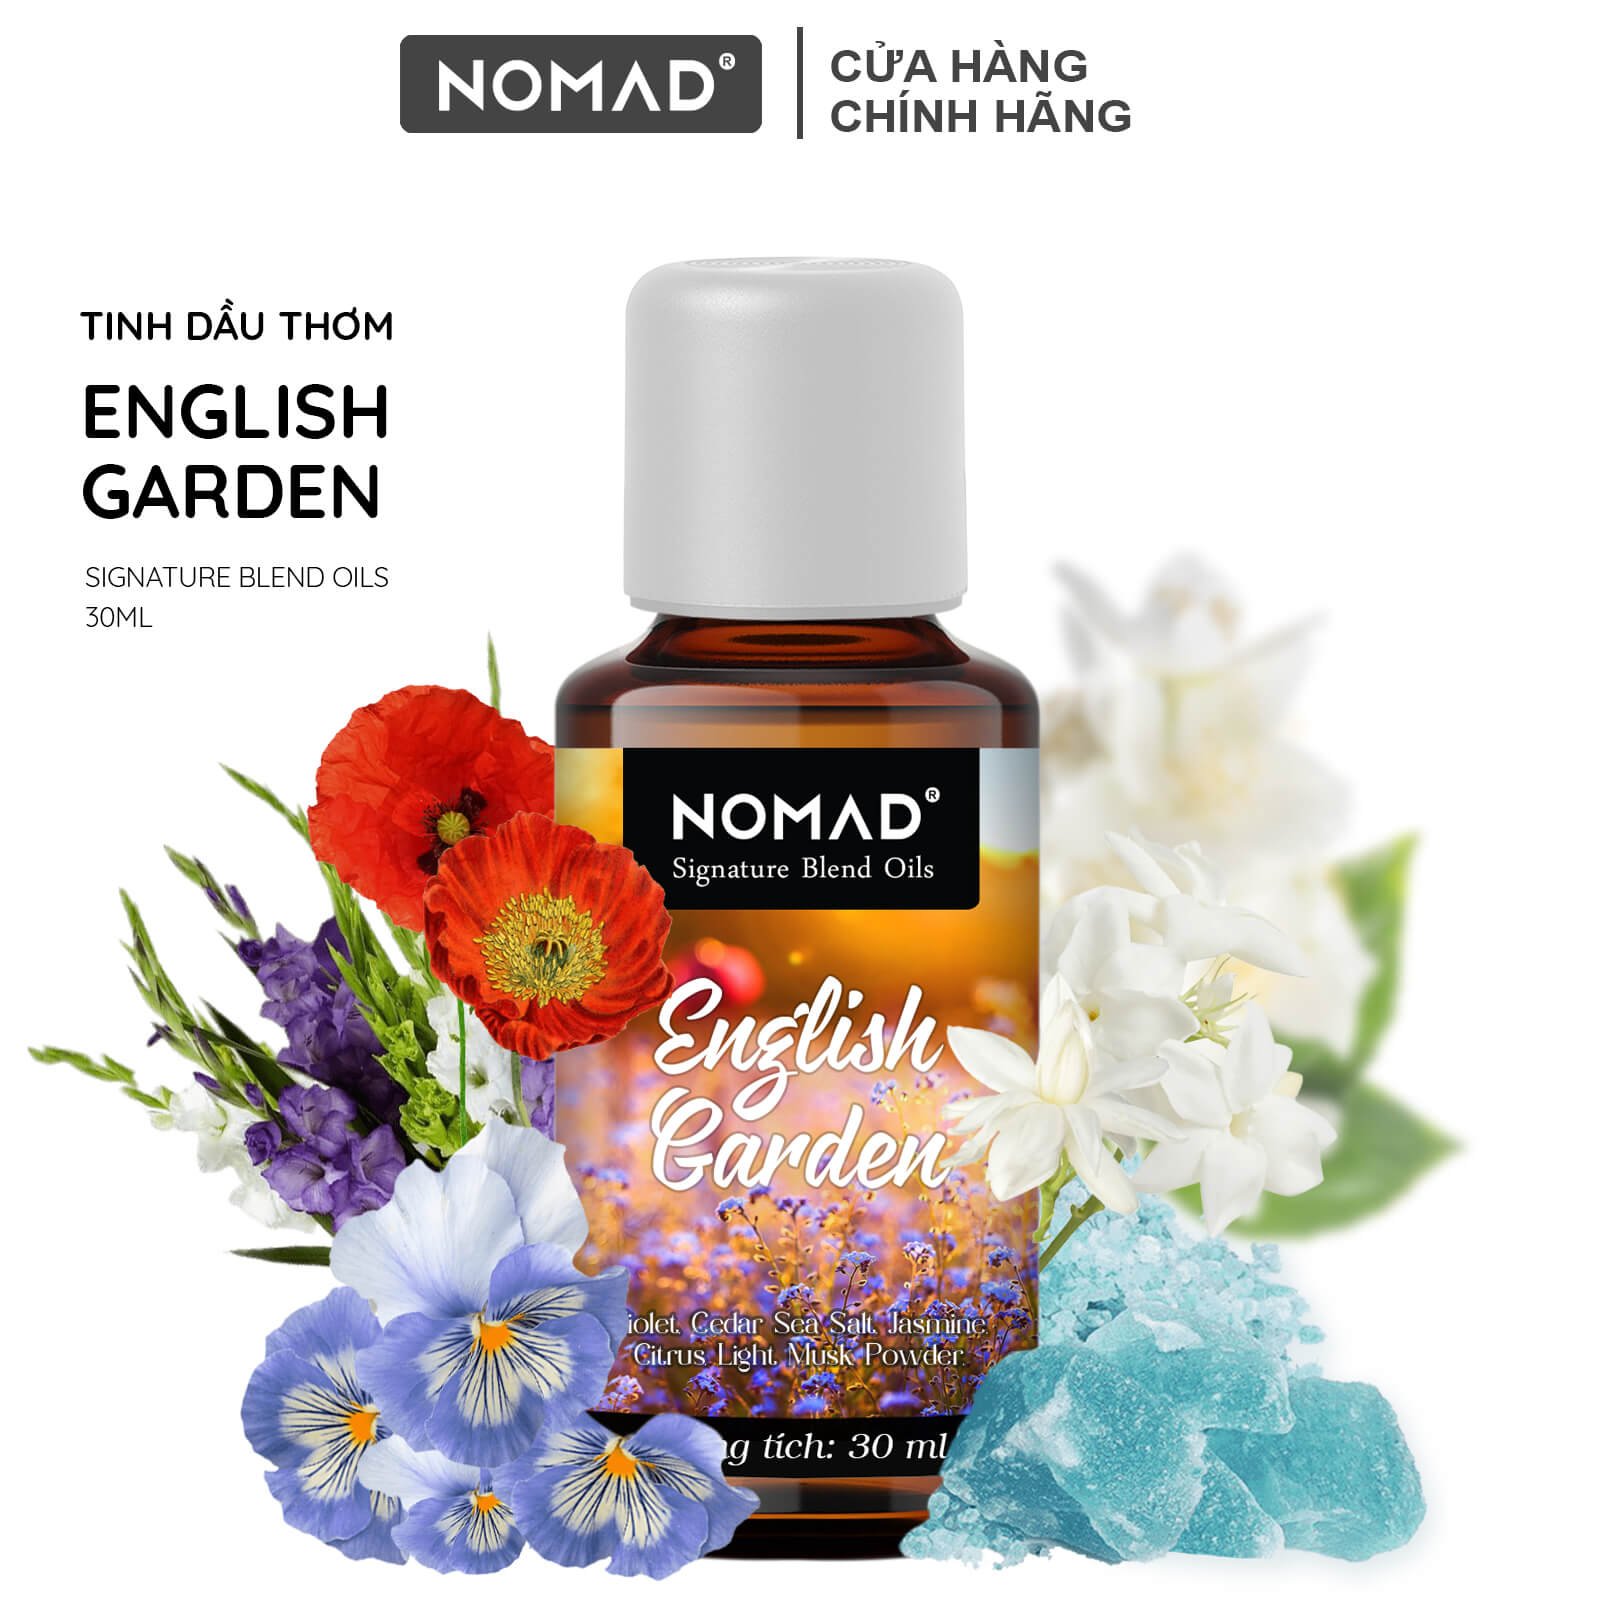 tinh-dau-thom-nomad-signature-blend-oils-english-garden